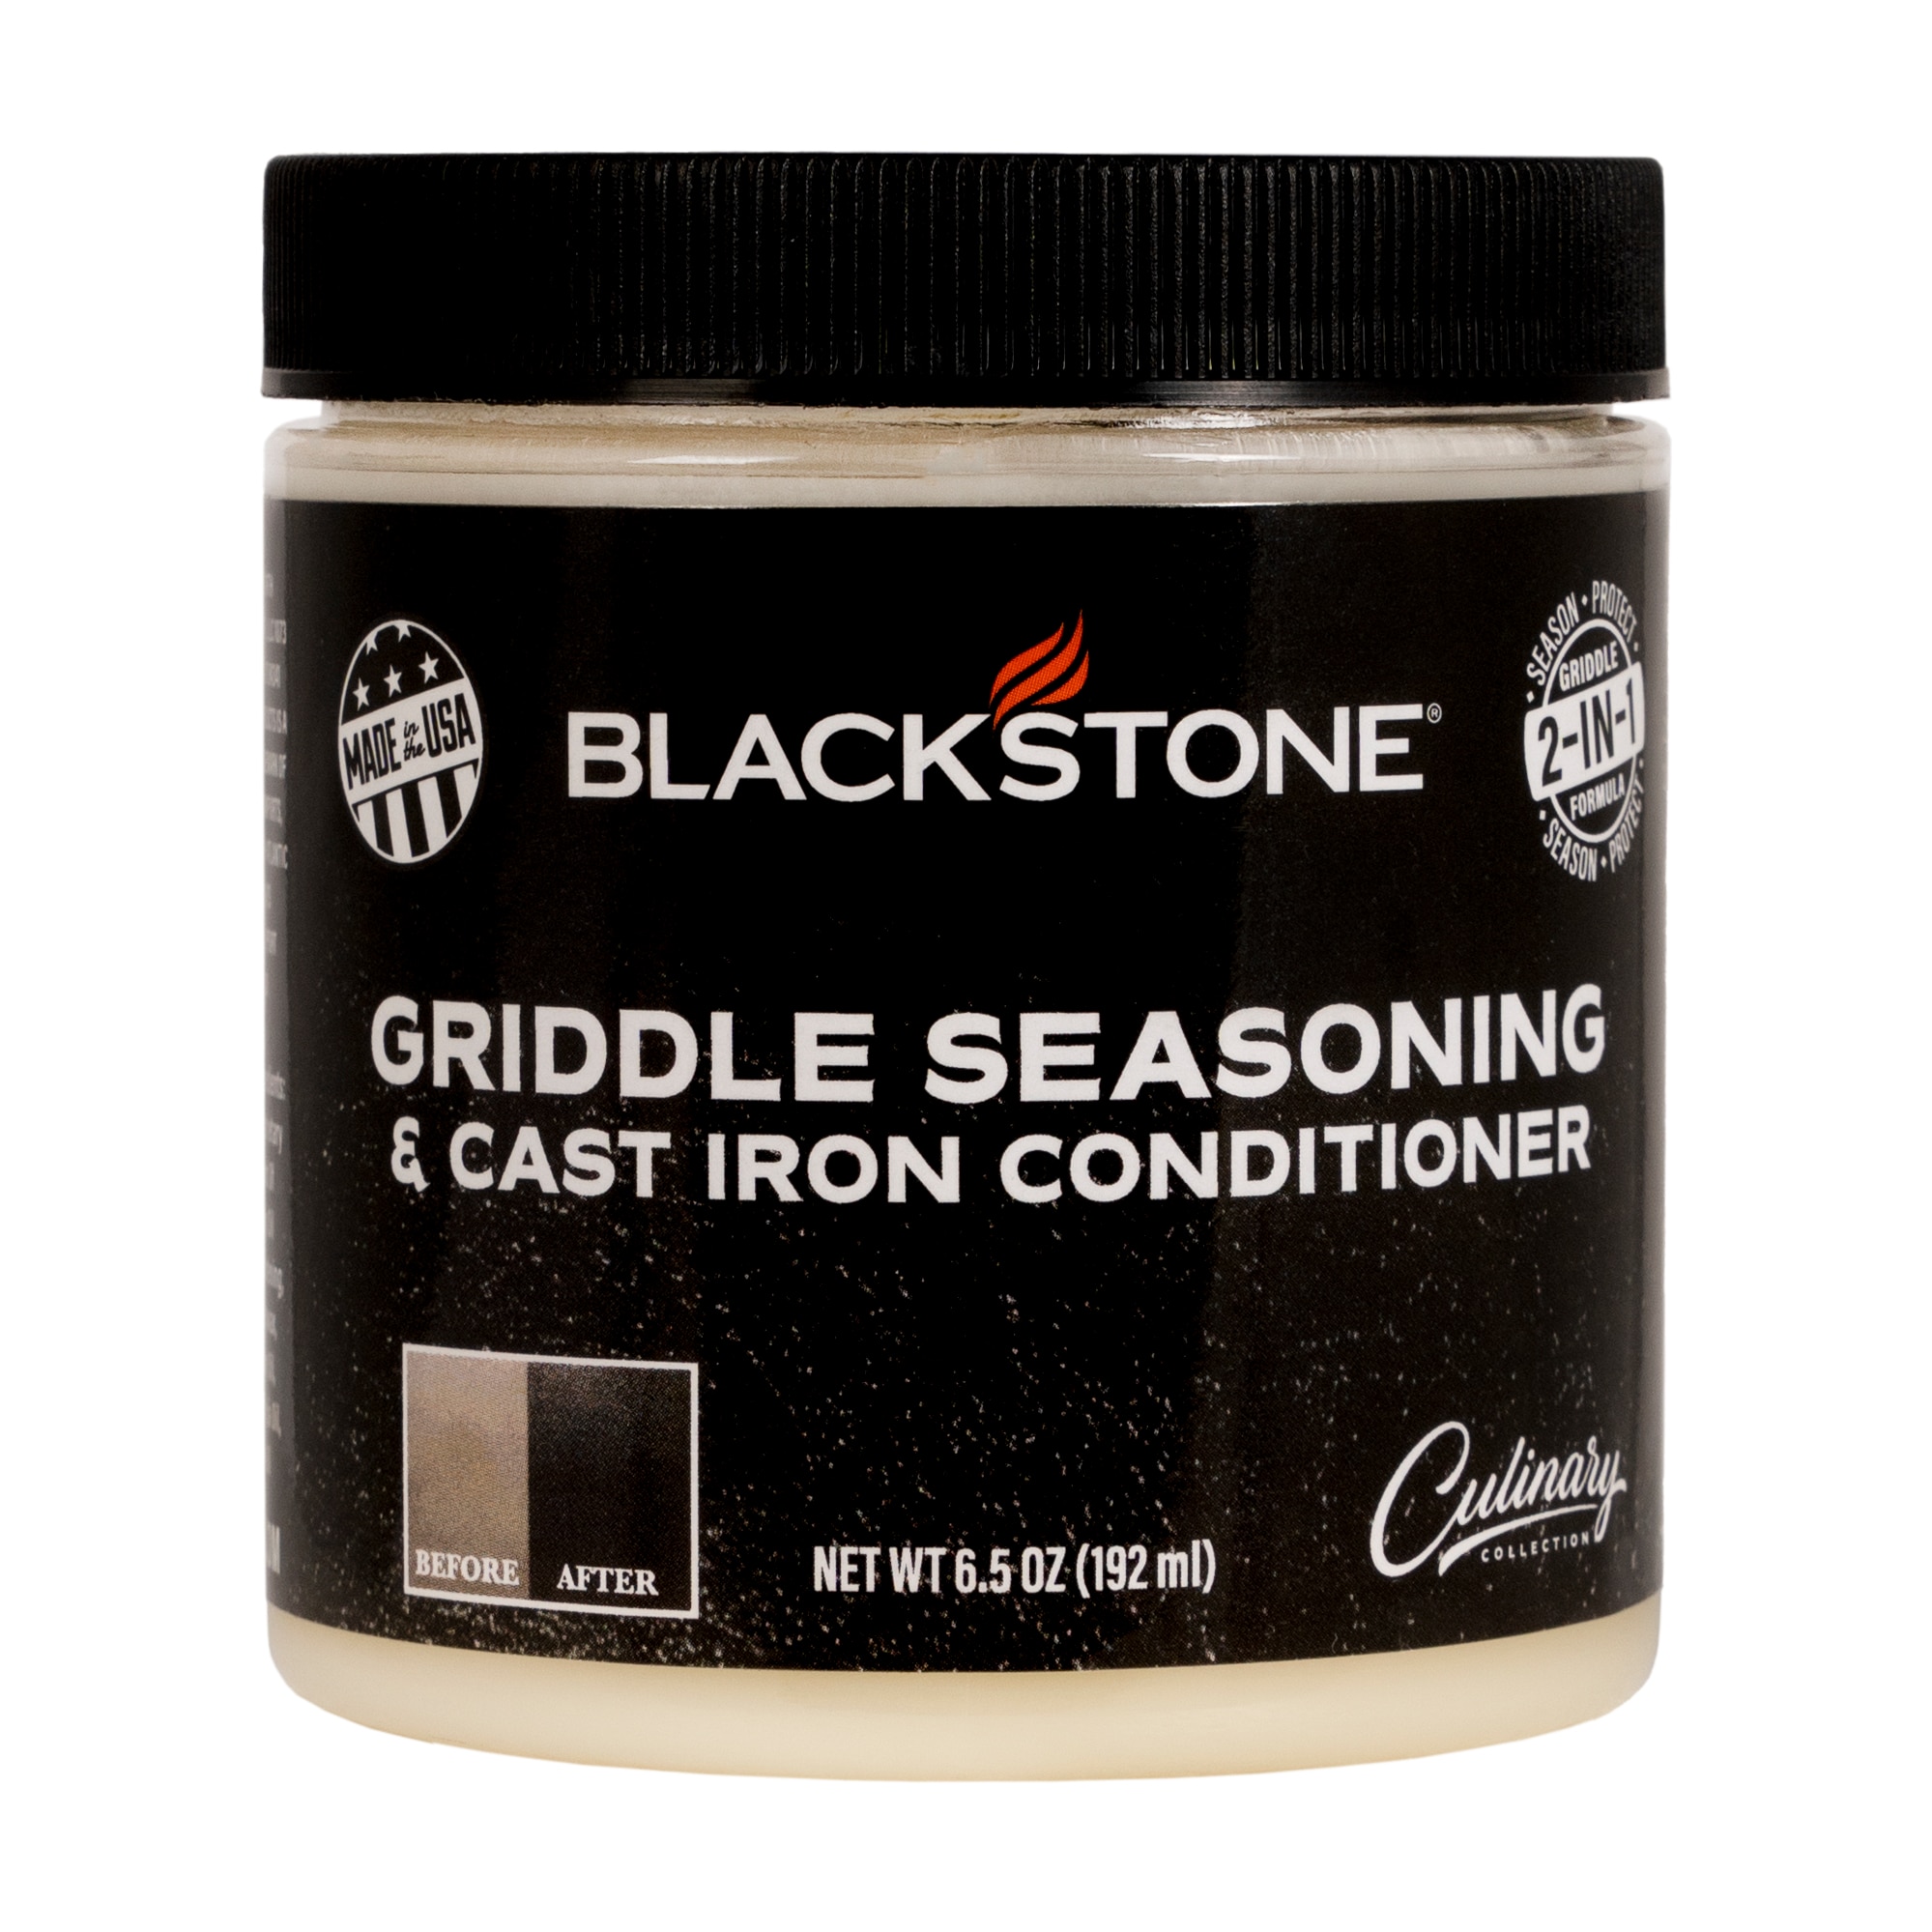 Cast Iron Seasoning wax Blackstone 2-IN-1 Griddle & Cast Iron